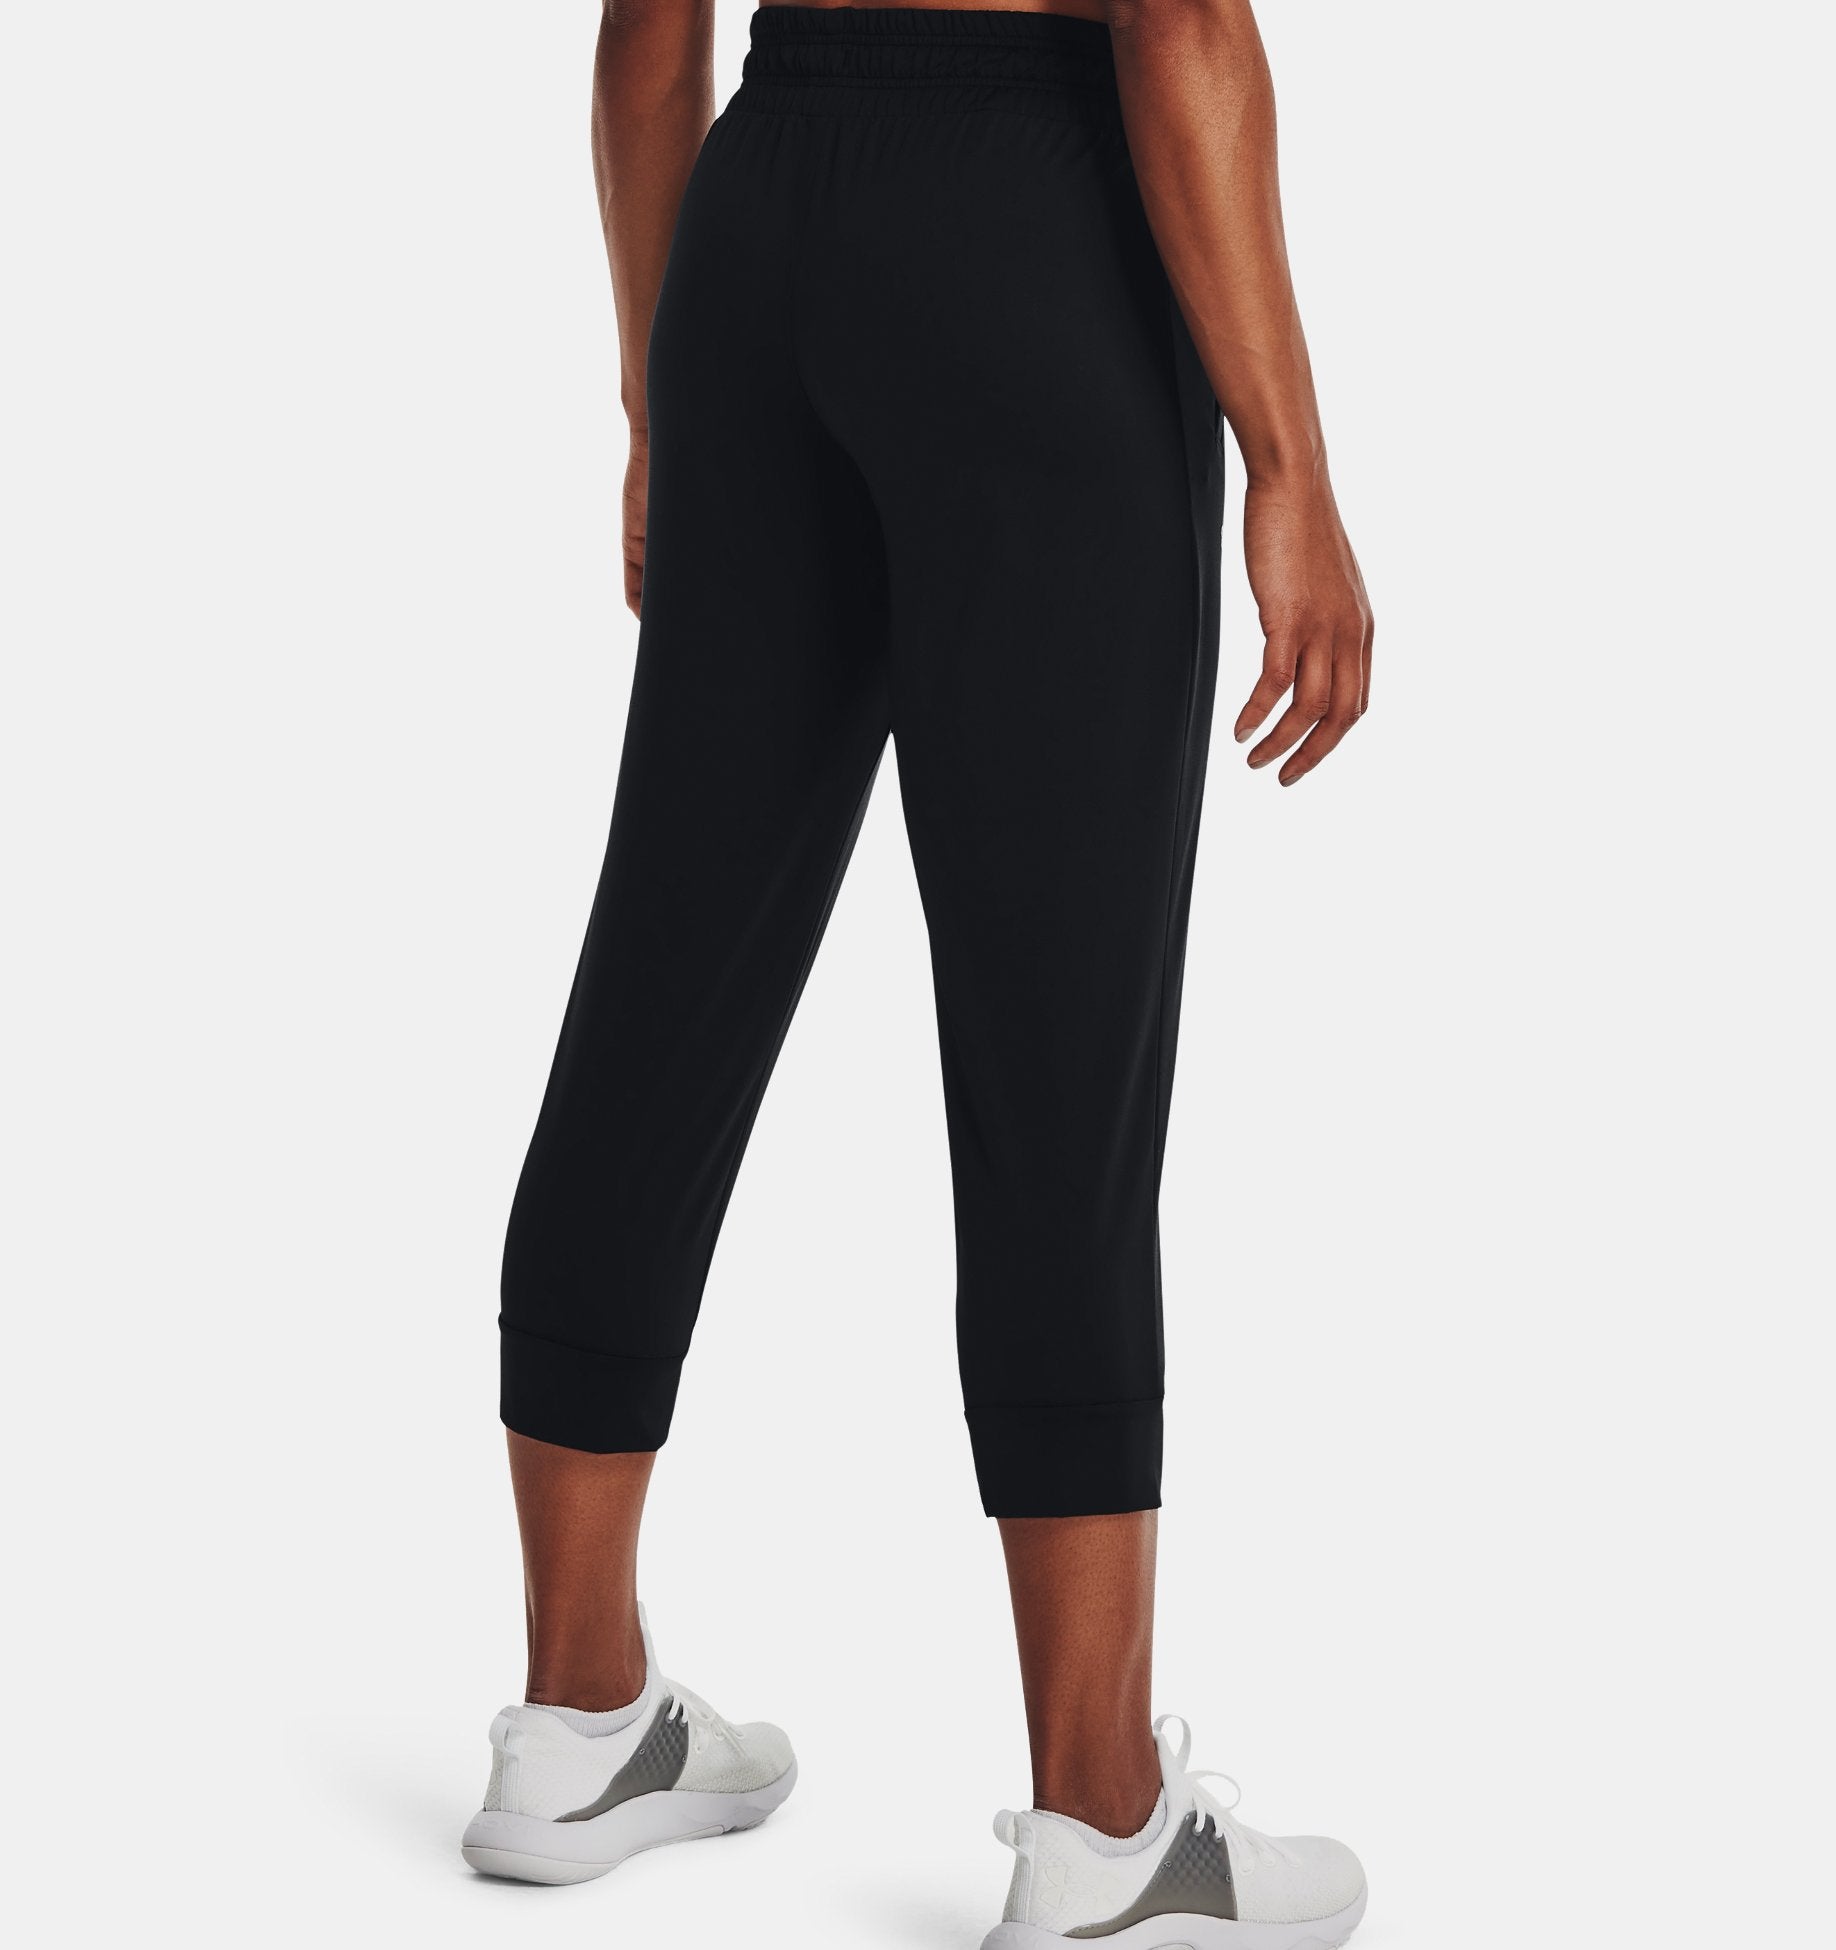 Women's HeatGear® Capri Pants - 1372632